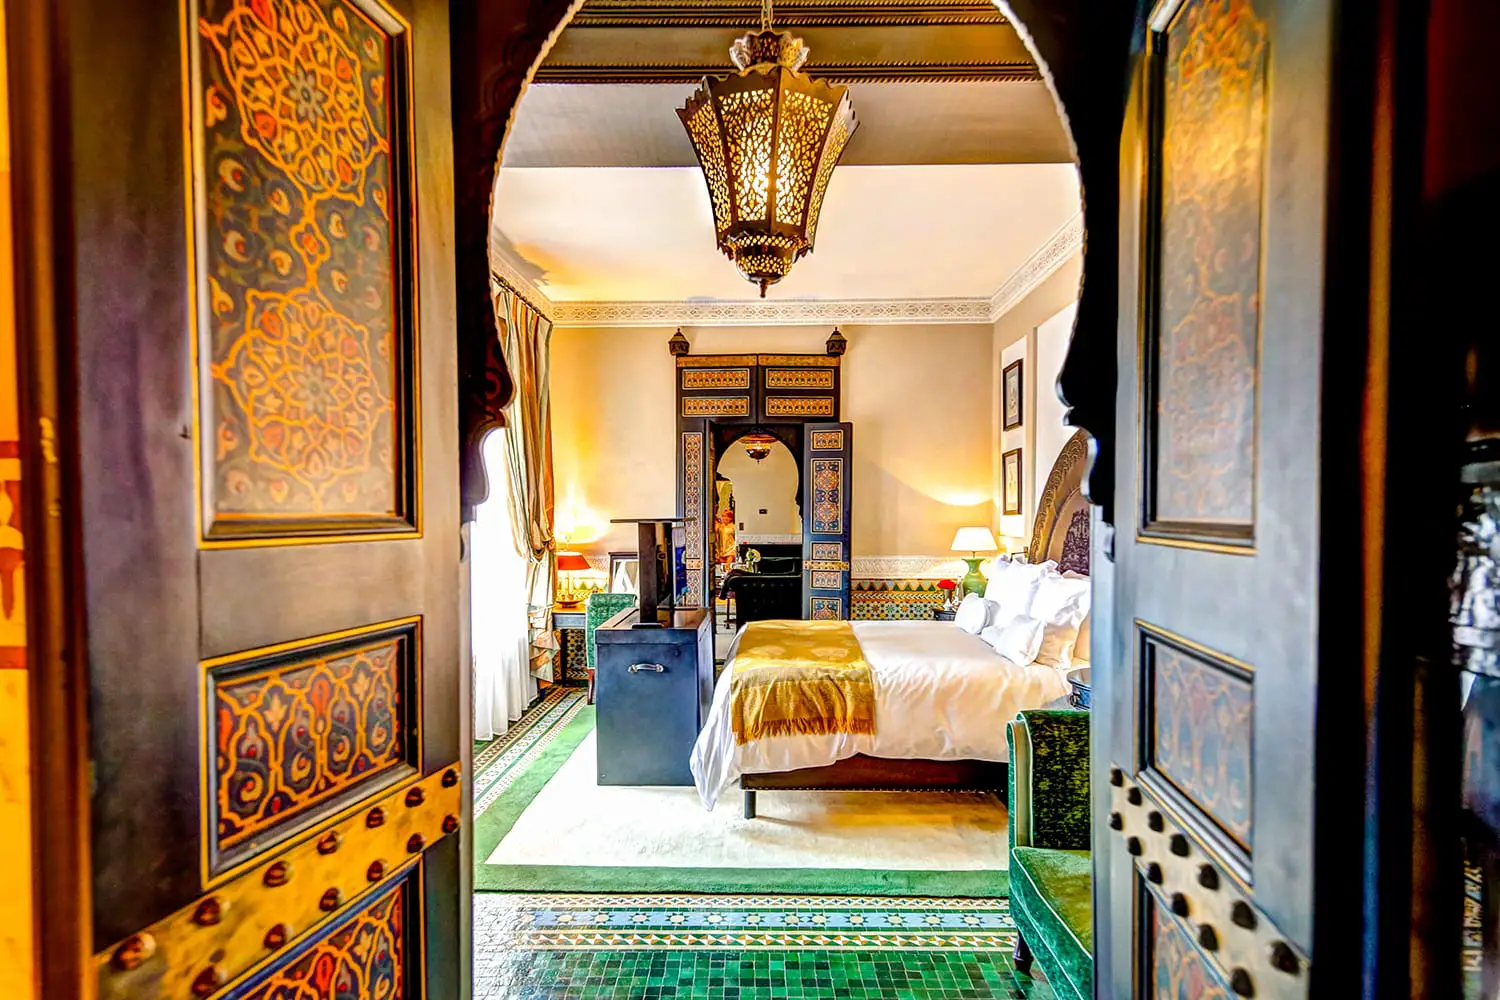 Interior of a suite at La Mamounia resort in Marrakech Morocco